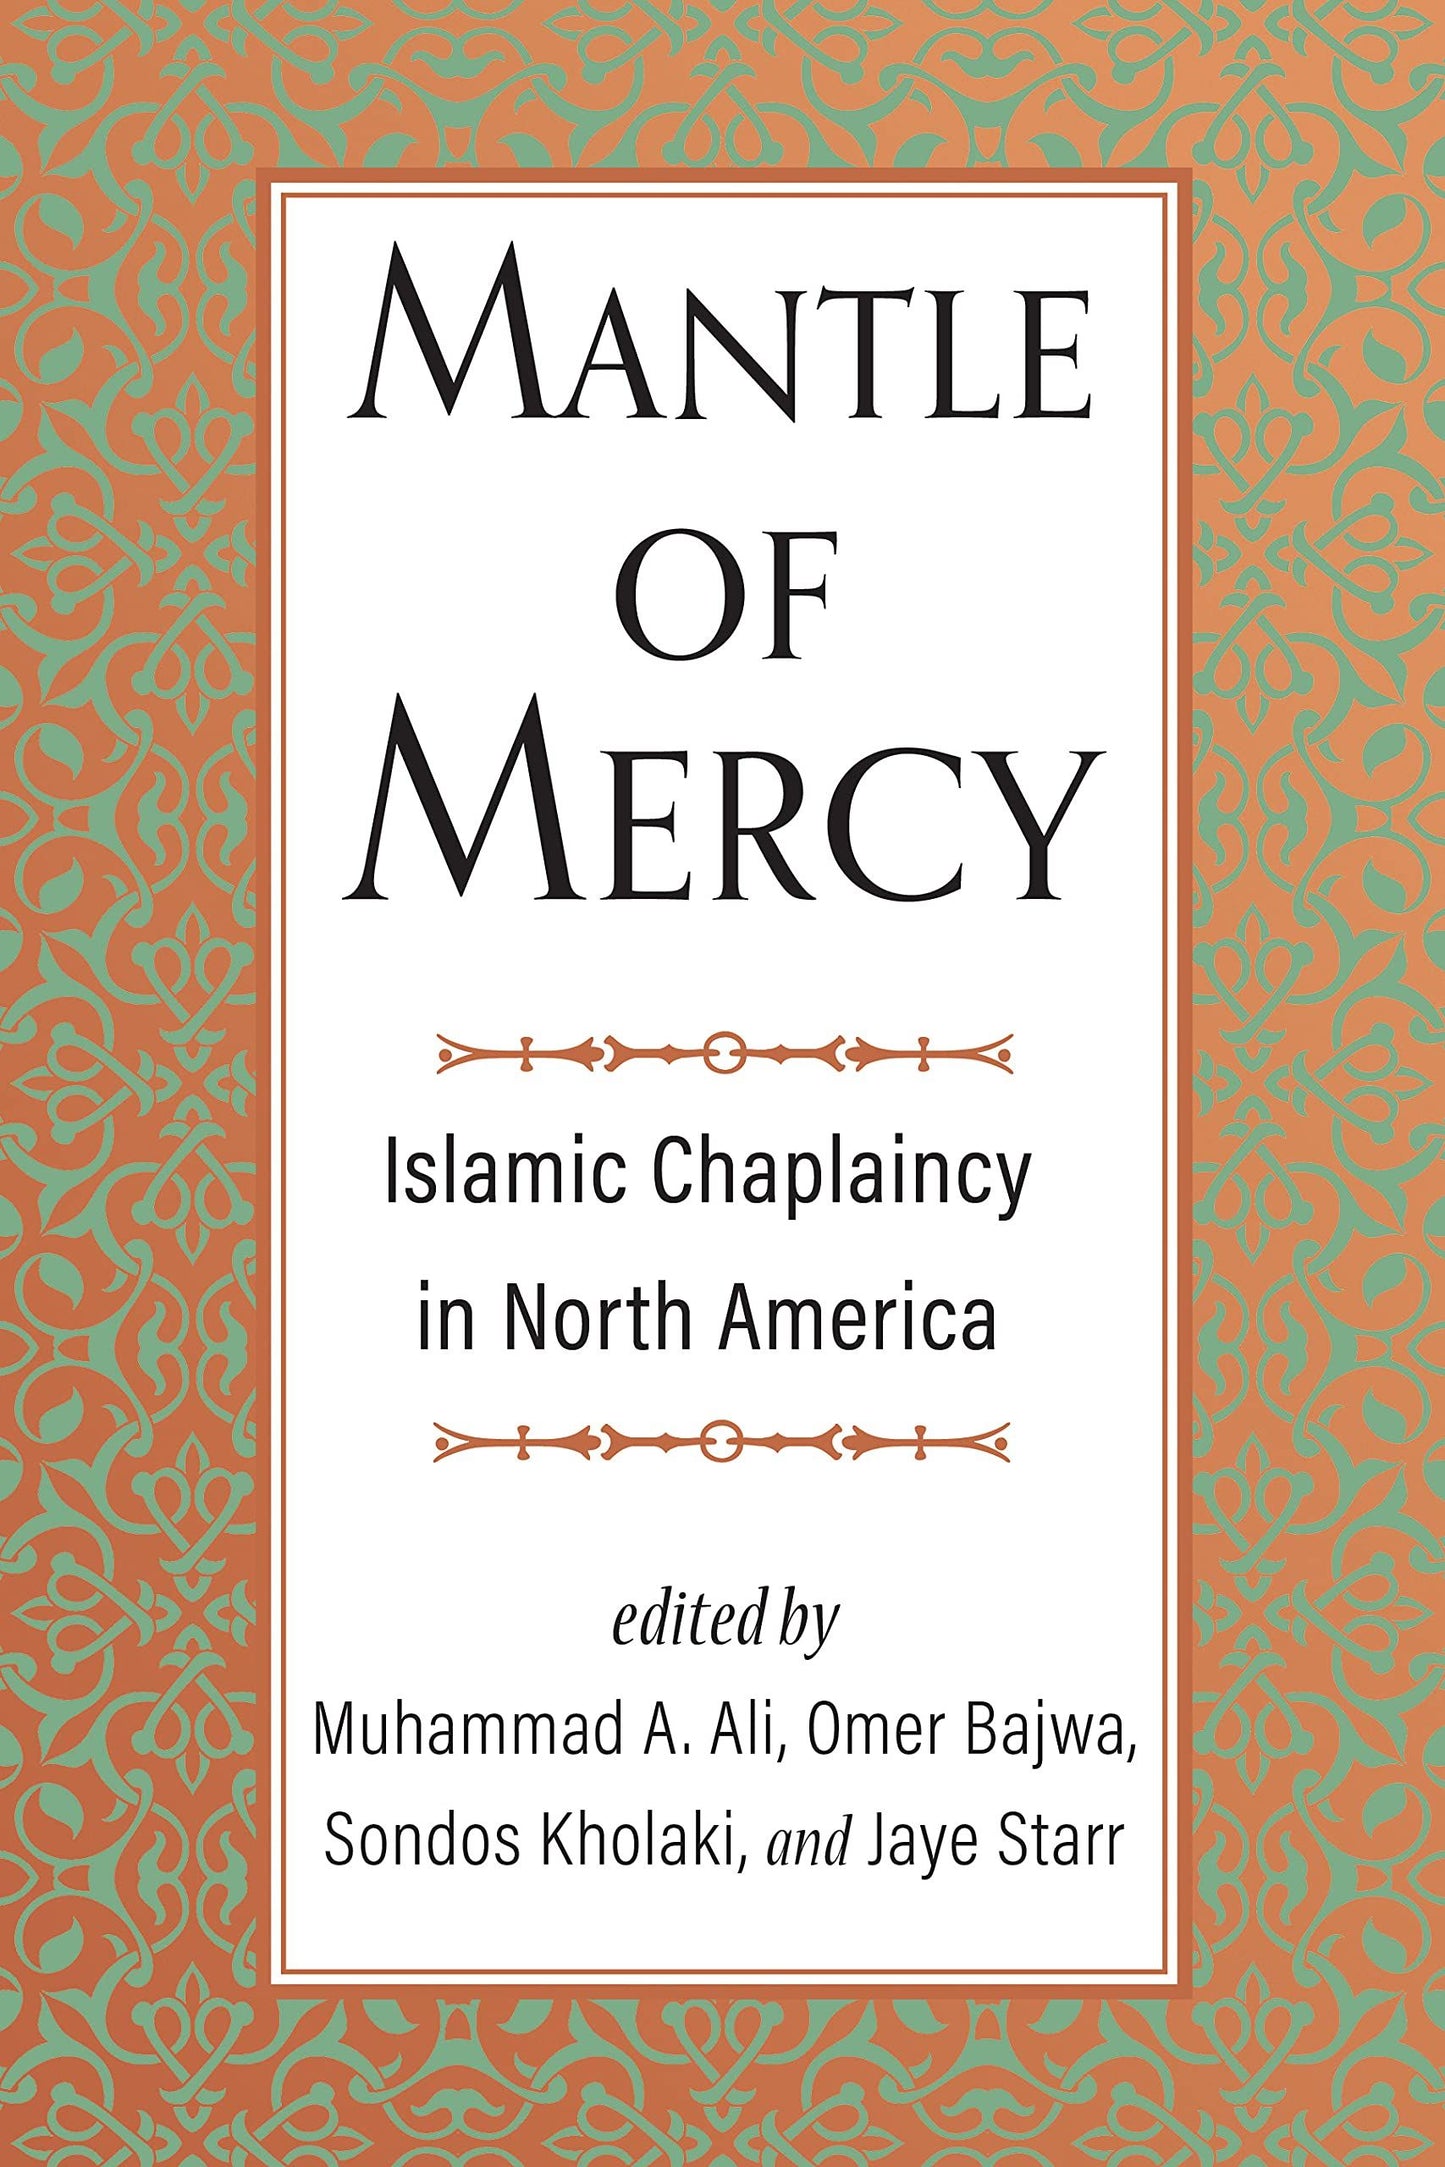 Mantle of Mercy: Islamic Chaplaincy in North America